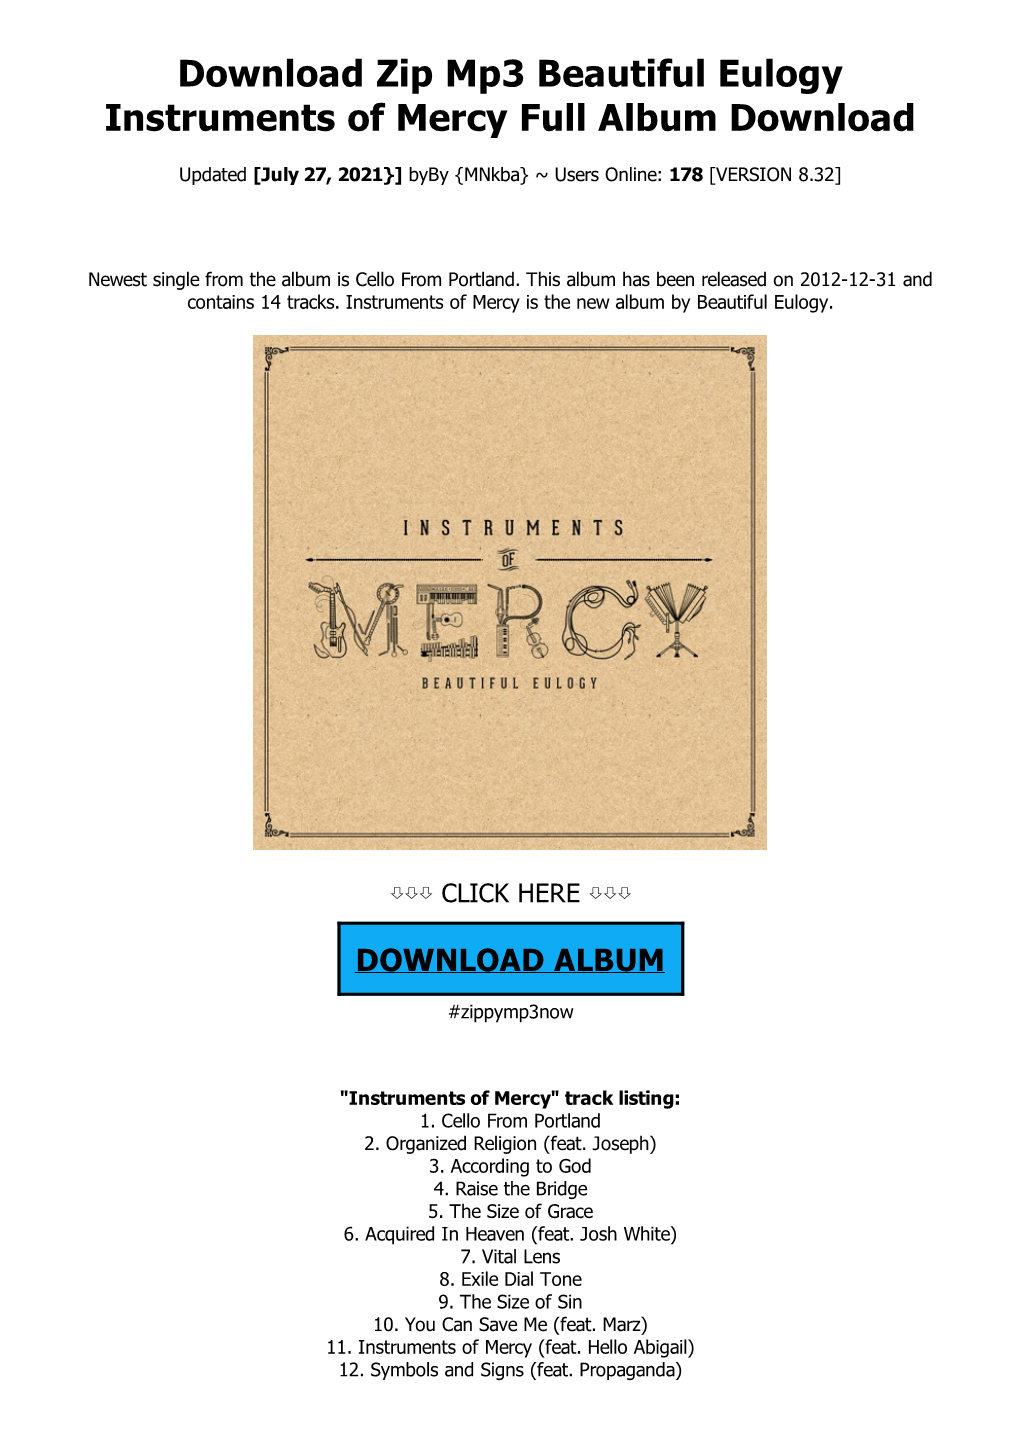 Download Zip Mp3 Beautiful Eulogy Instruments of Mercy Full Album Download